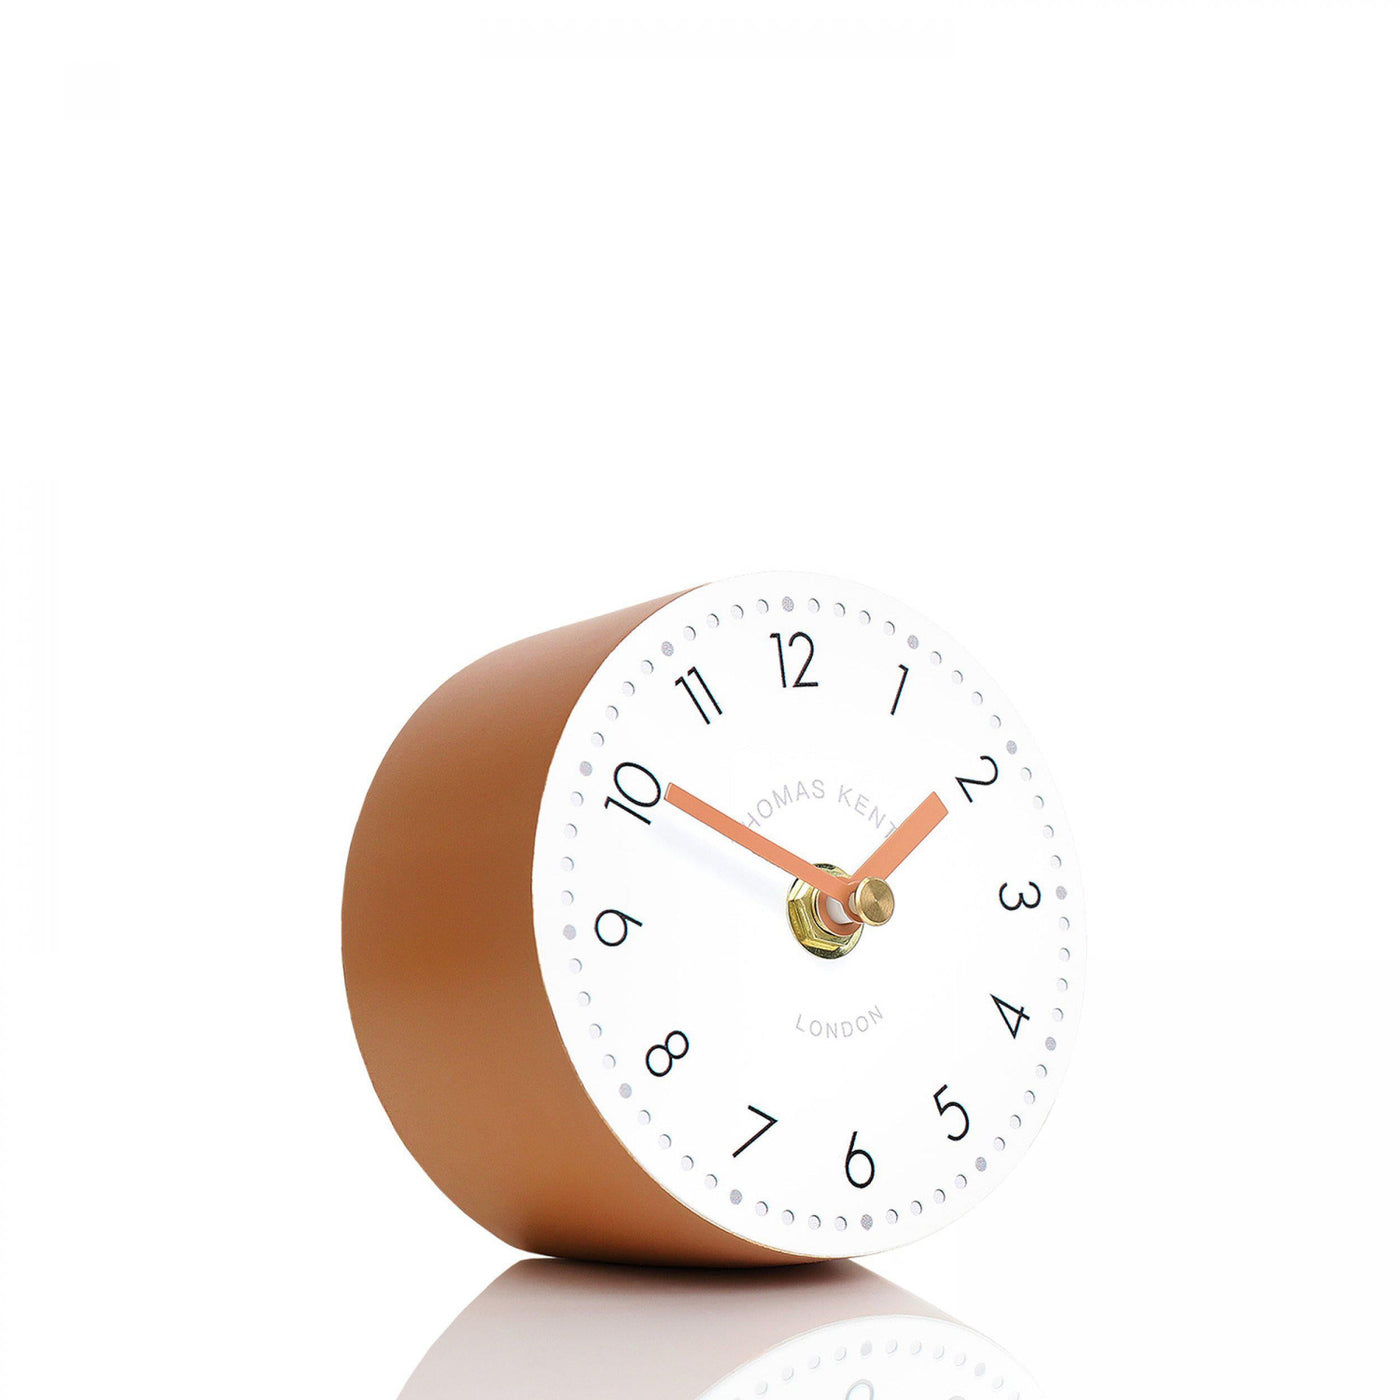 Thomas Kent London. Tumbler Mantel Clock Sienna - timeframedclocks